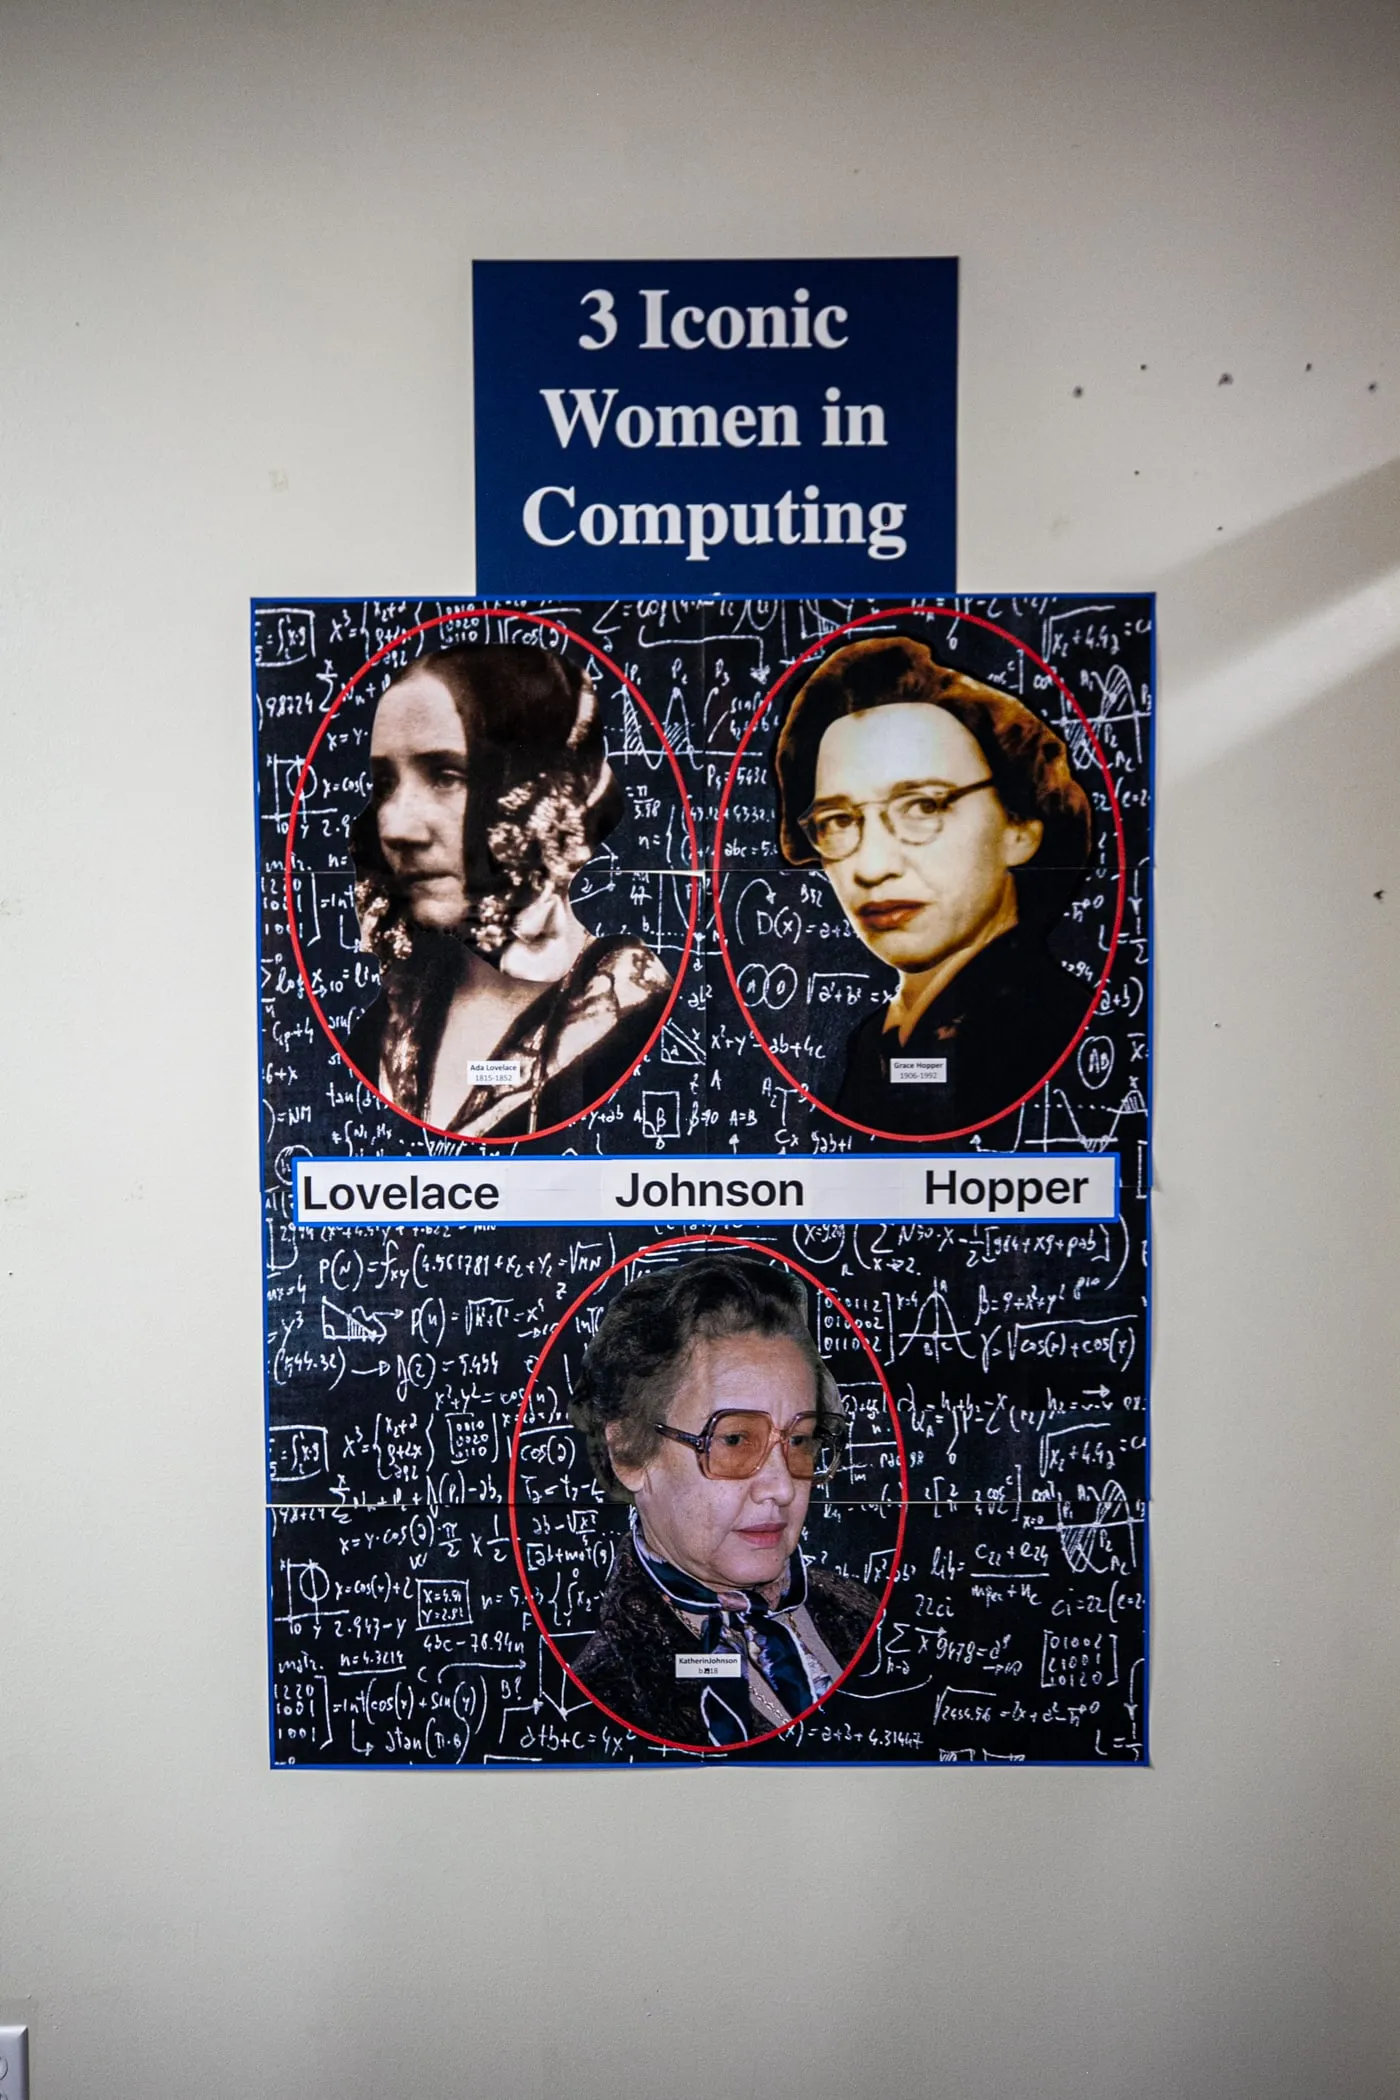 3 Iconic Women in Computing: Lovelace, Johnson, Hopper - American Computer & Robotics Museum in Bozeman, Montana